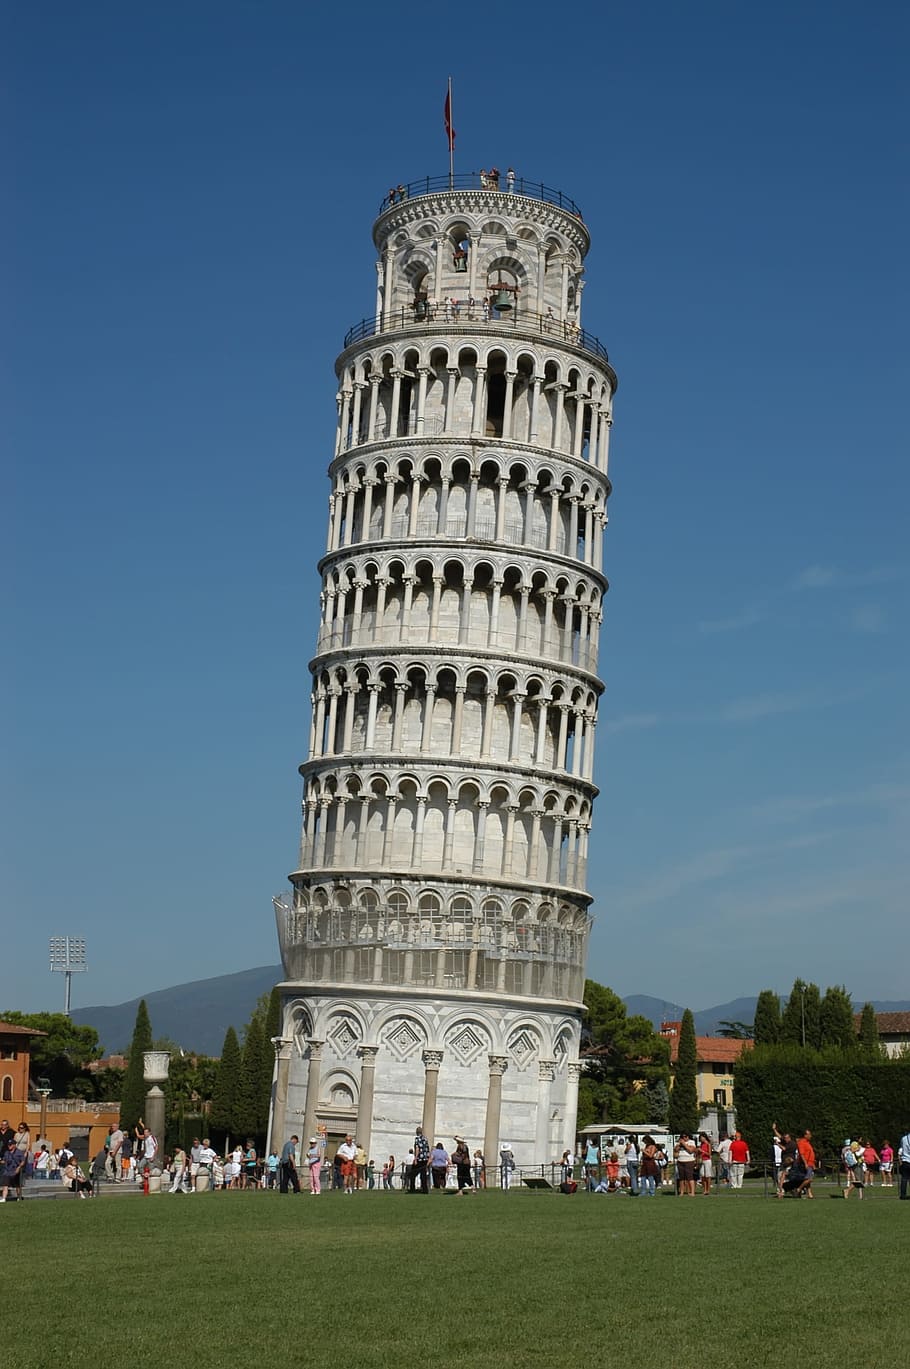 inclinada, torre, Torre inclinada, Pisa, Italia, lugar famoso, Europa, estabilidad, arquitectura, cultura europea